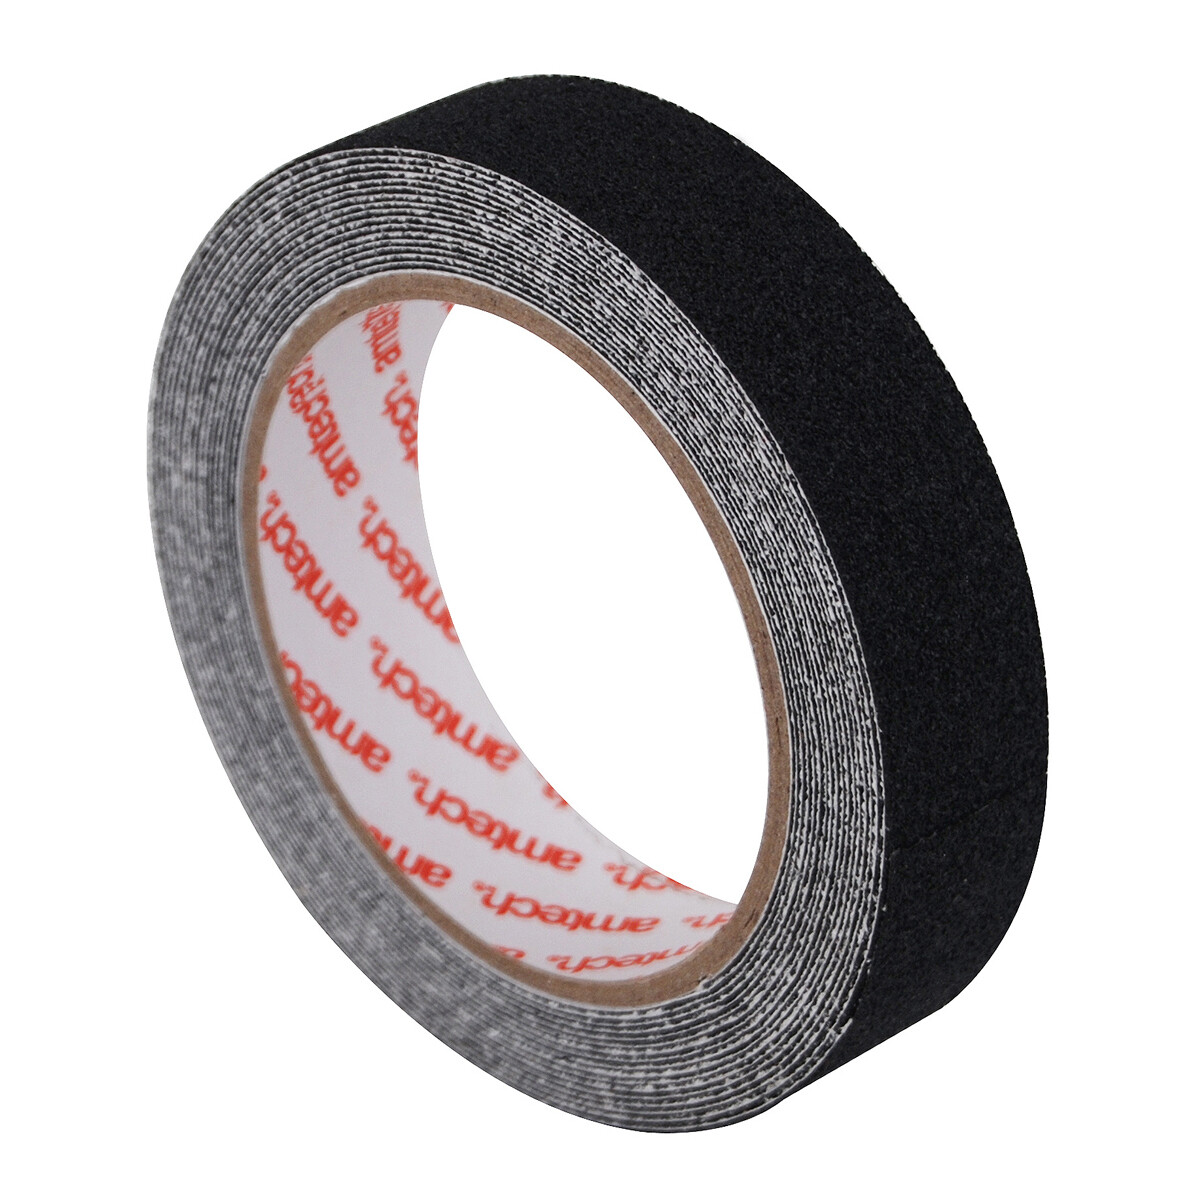 Roll of waterproof anti-slip grip tape (5m x 24mm)